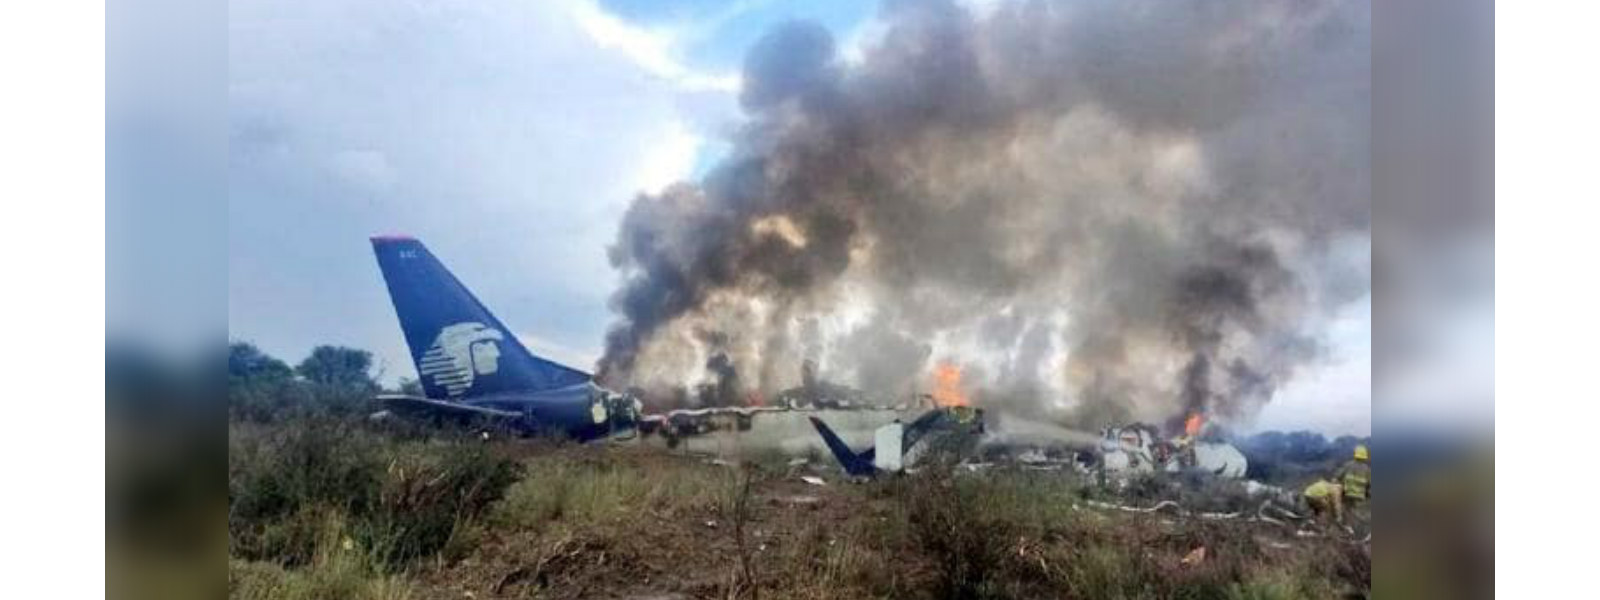 Jet crash in Durango, Mexico injures 85 